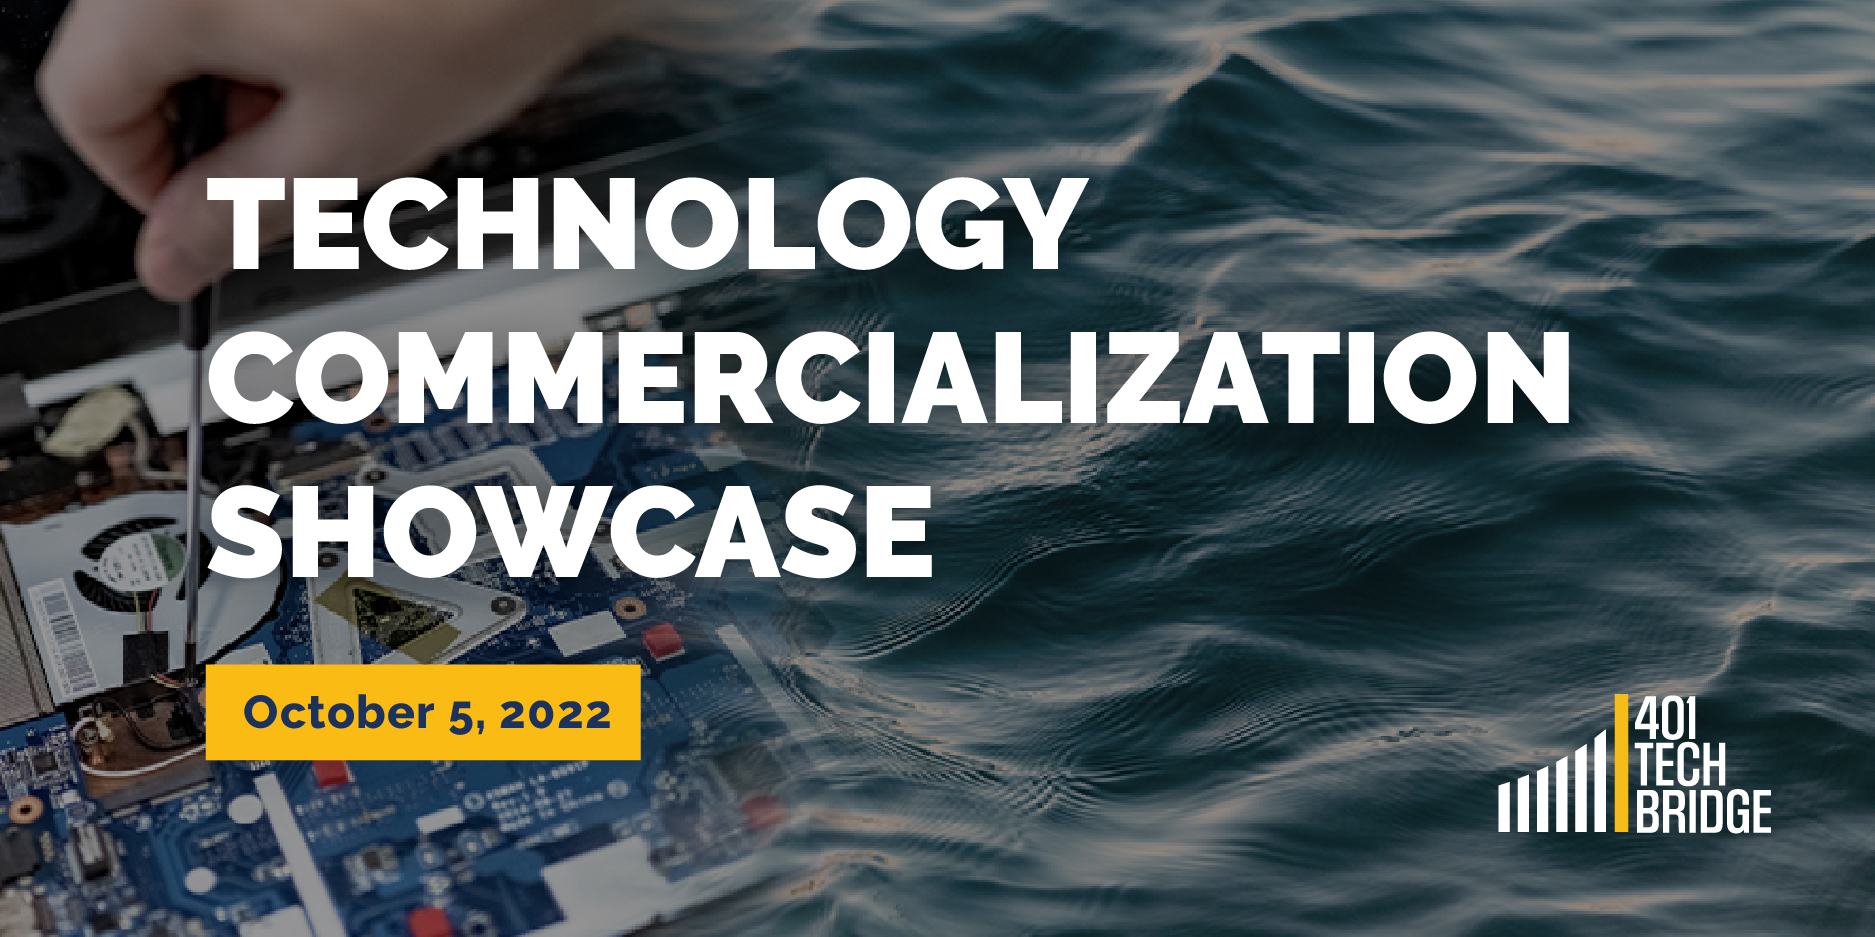 Technology Commercialization Showcase October 5, 2022